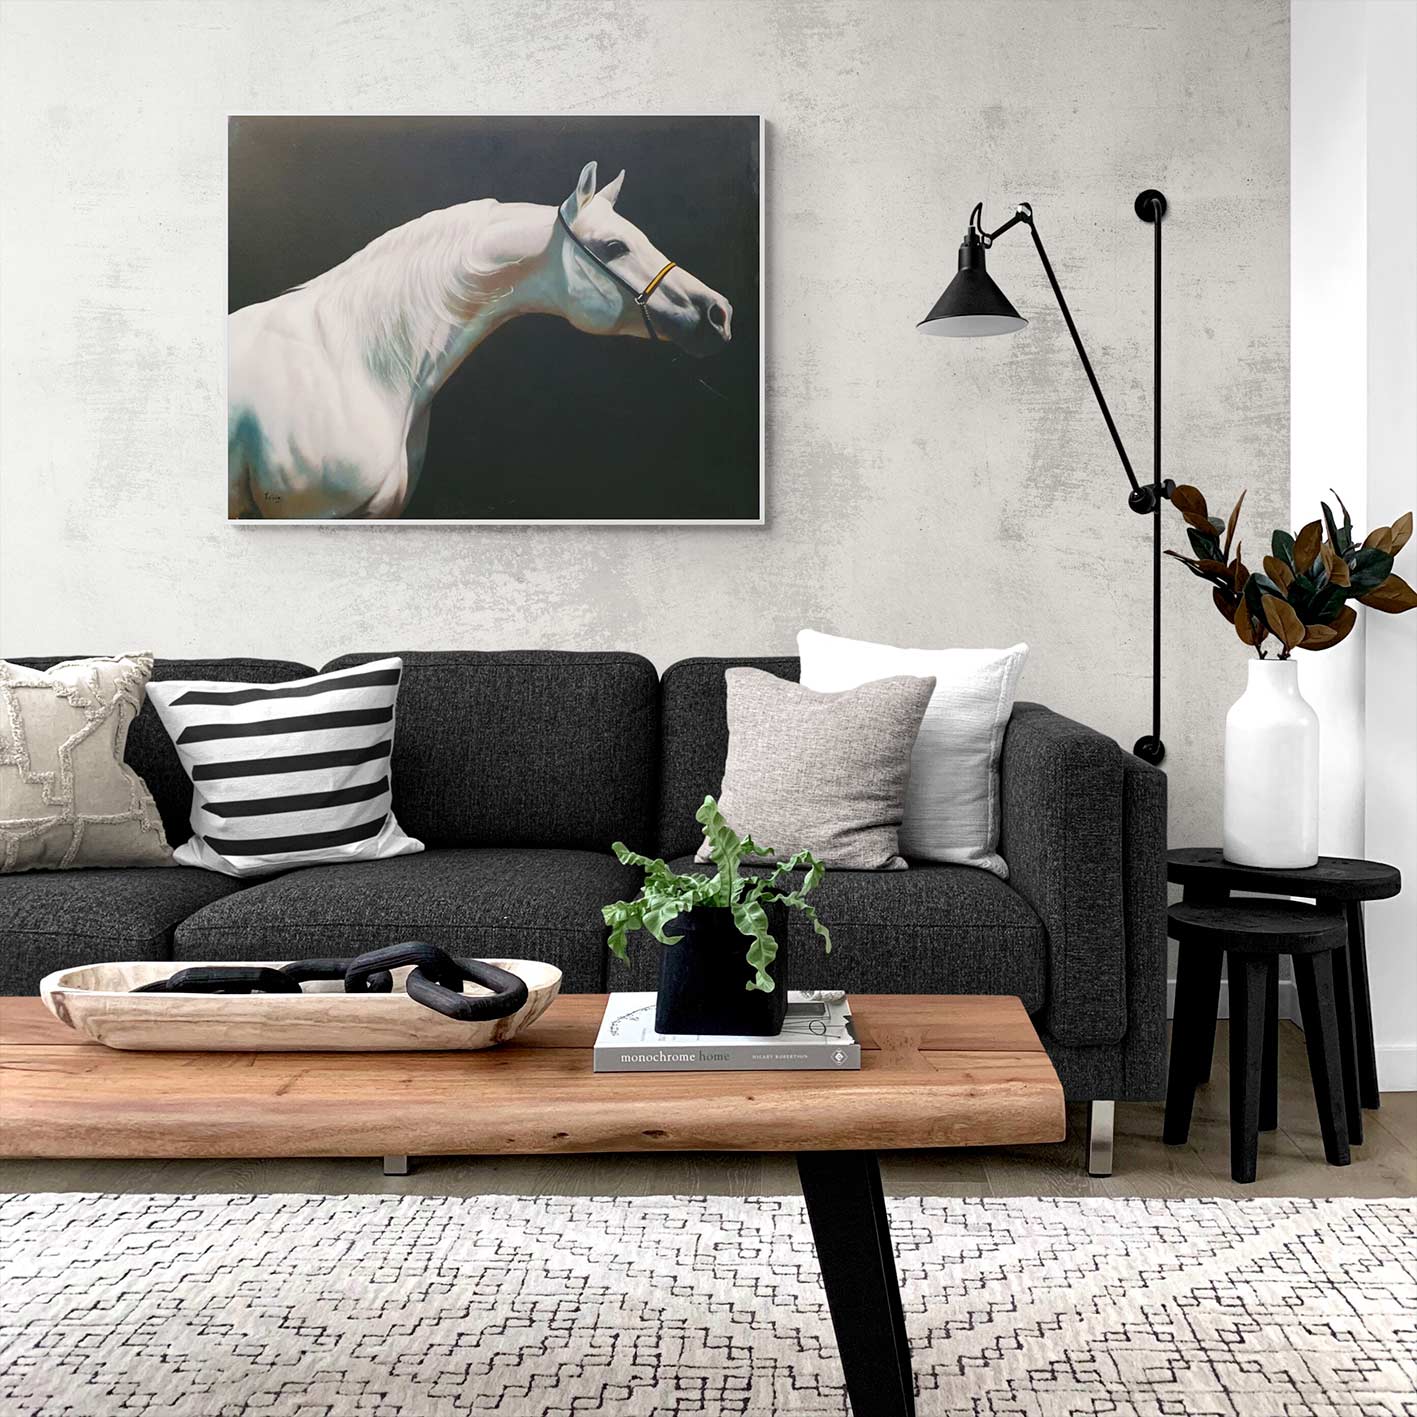 White Horse Painting 100x80 cm